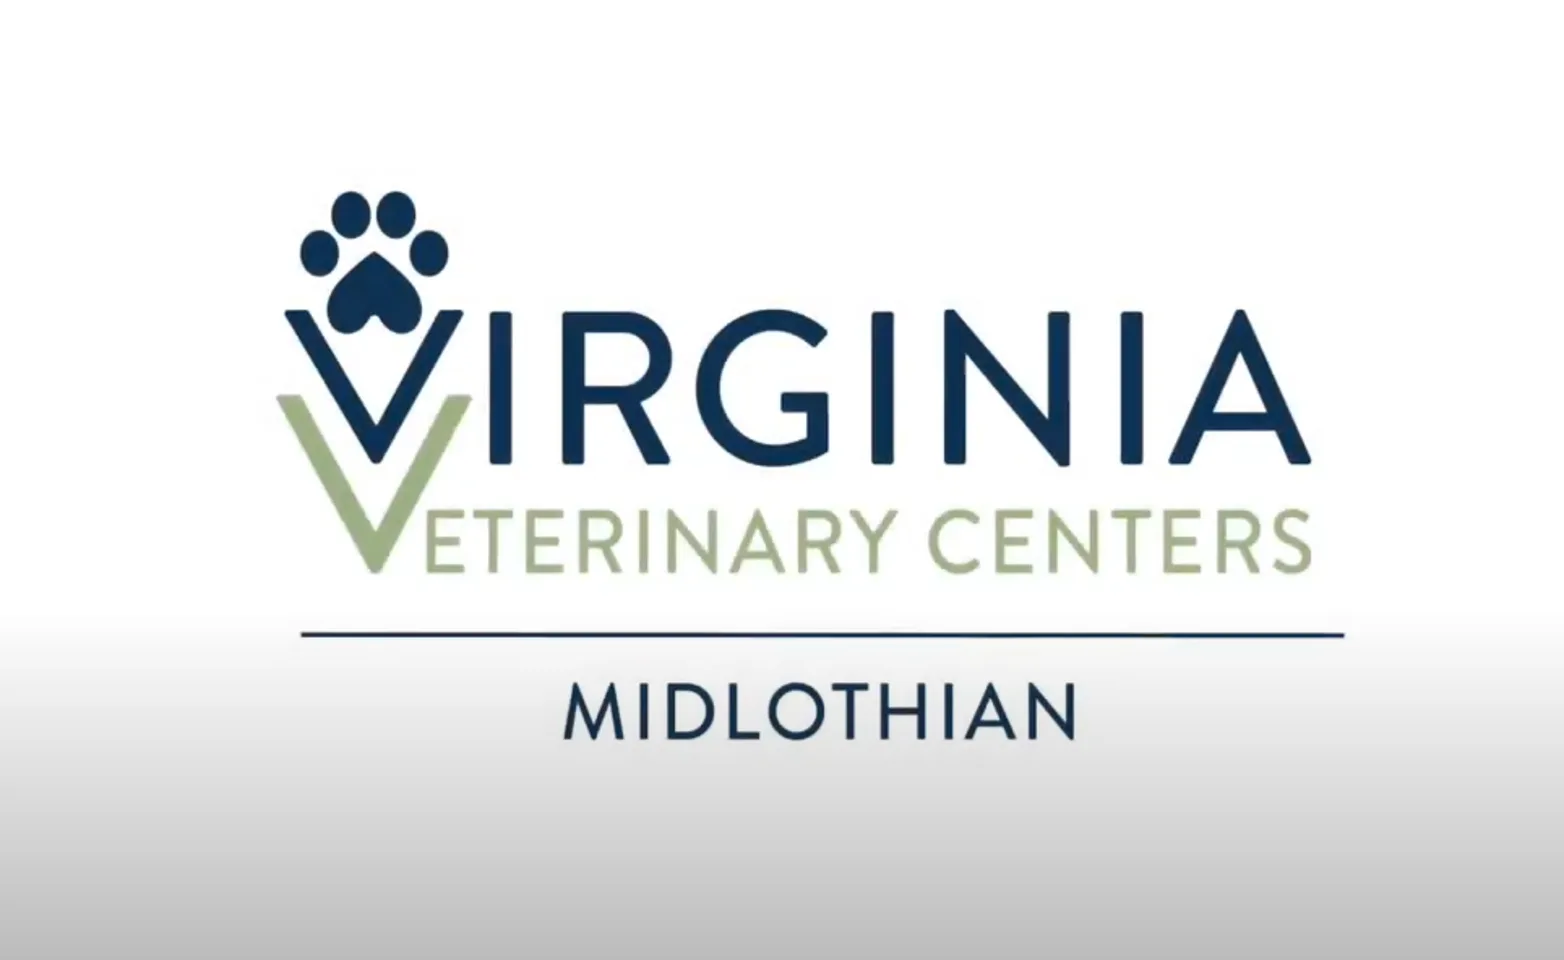 Virginia Veterinary Centers Midlothian